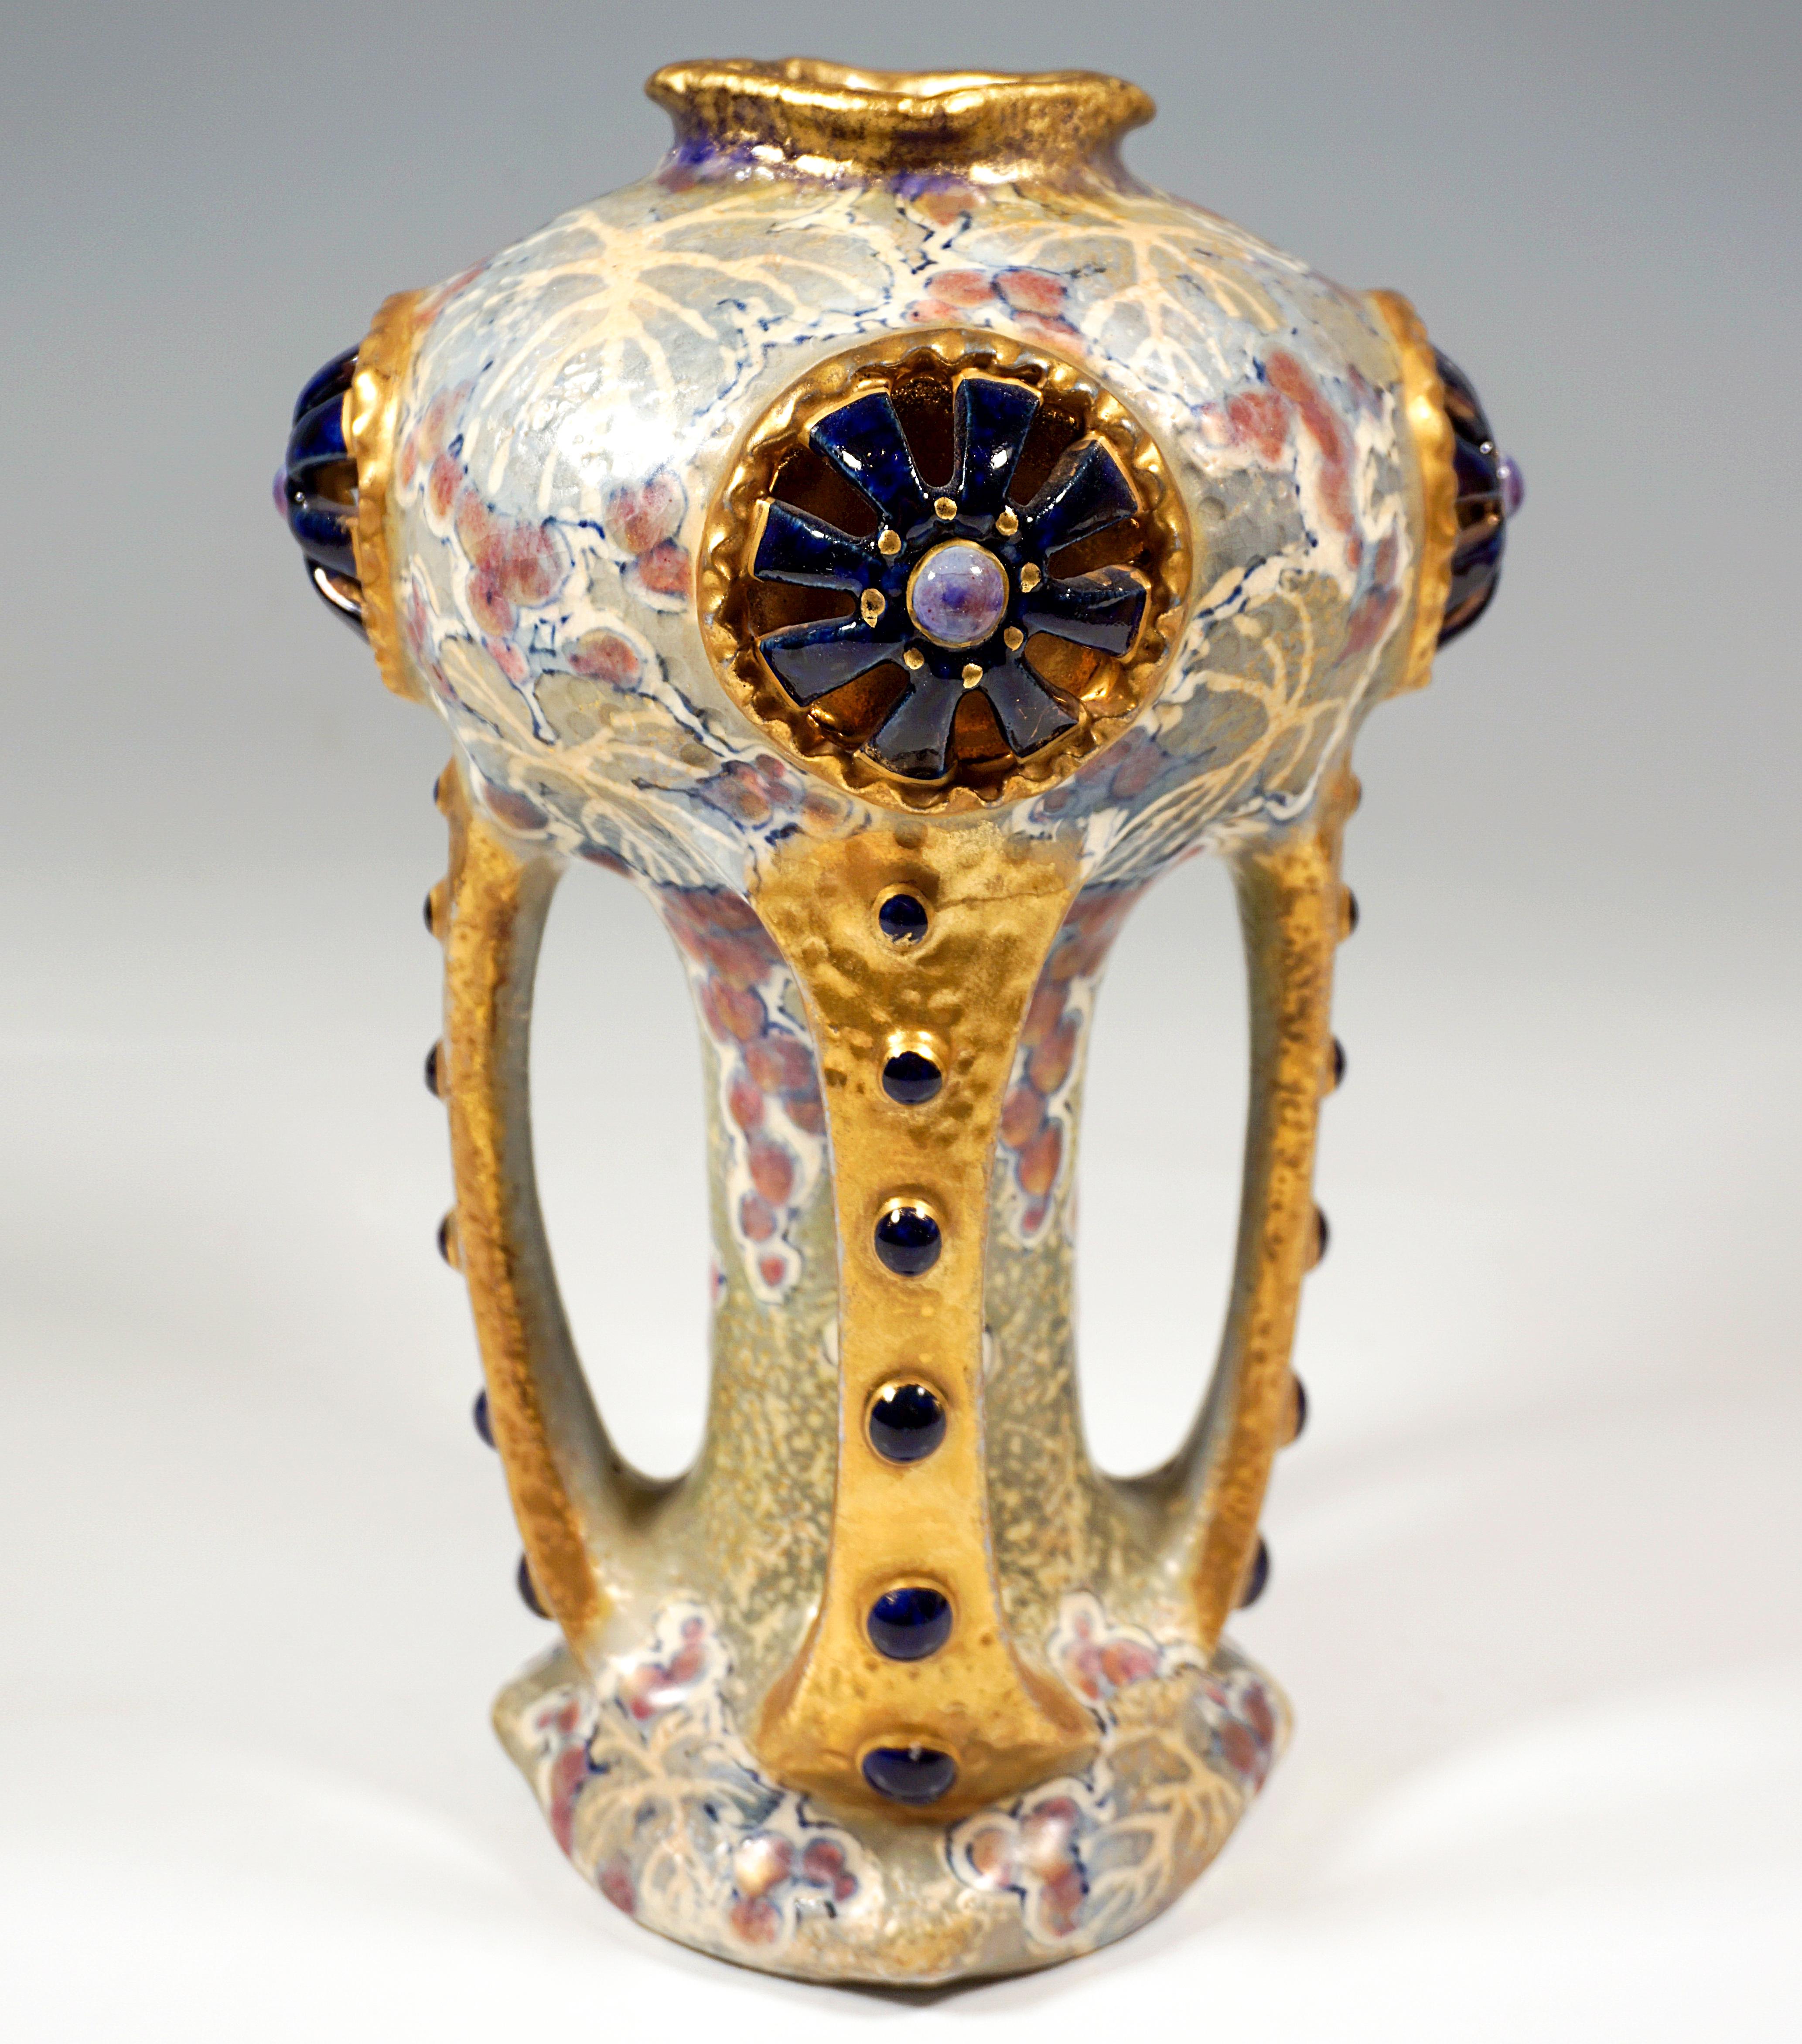 Hand-Crafted Art Nouveau Ceramic Vase, Amphora Riessner Stellmacher & Kessel, Austria c. 1910